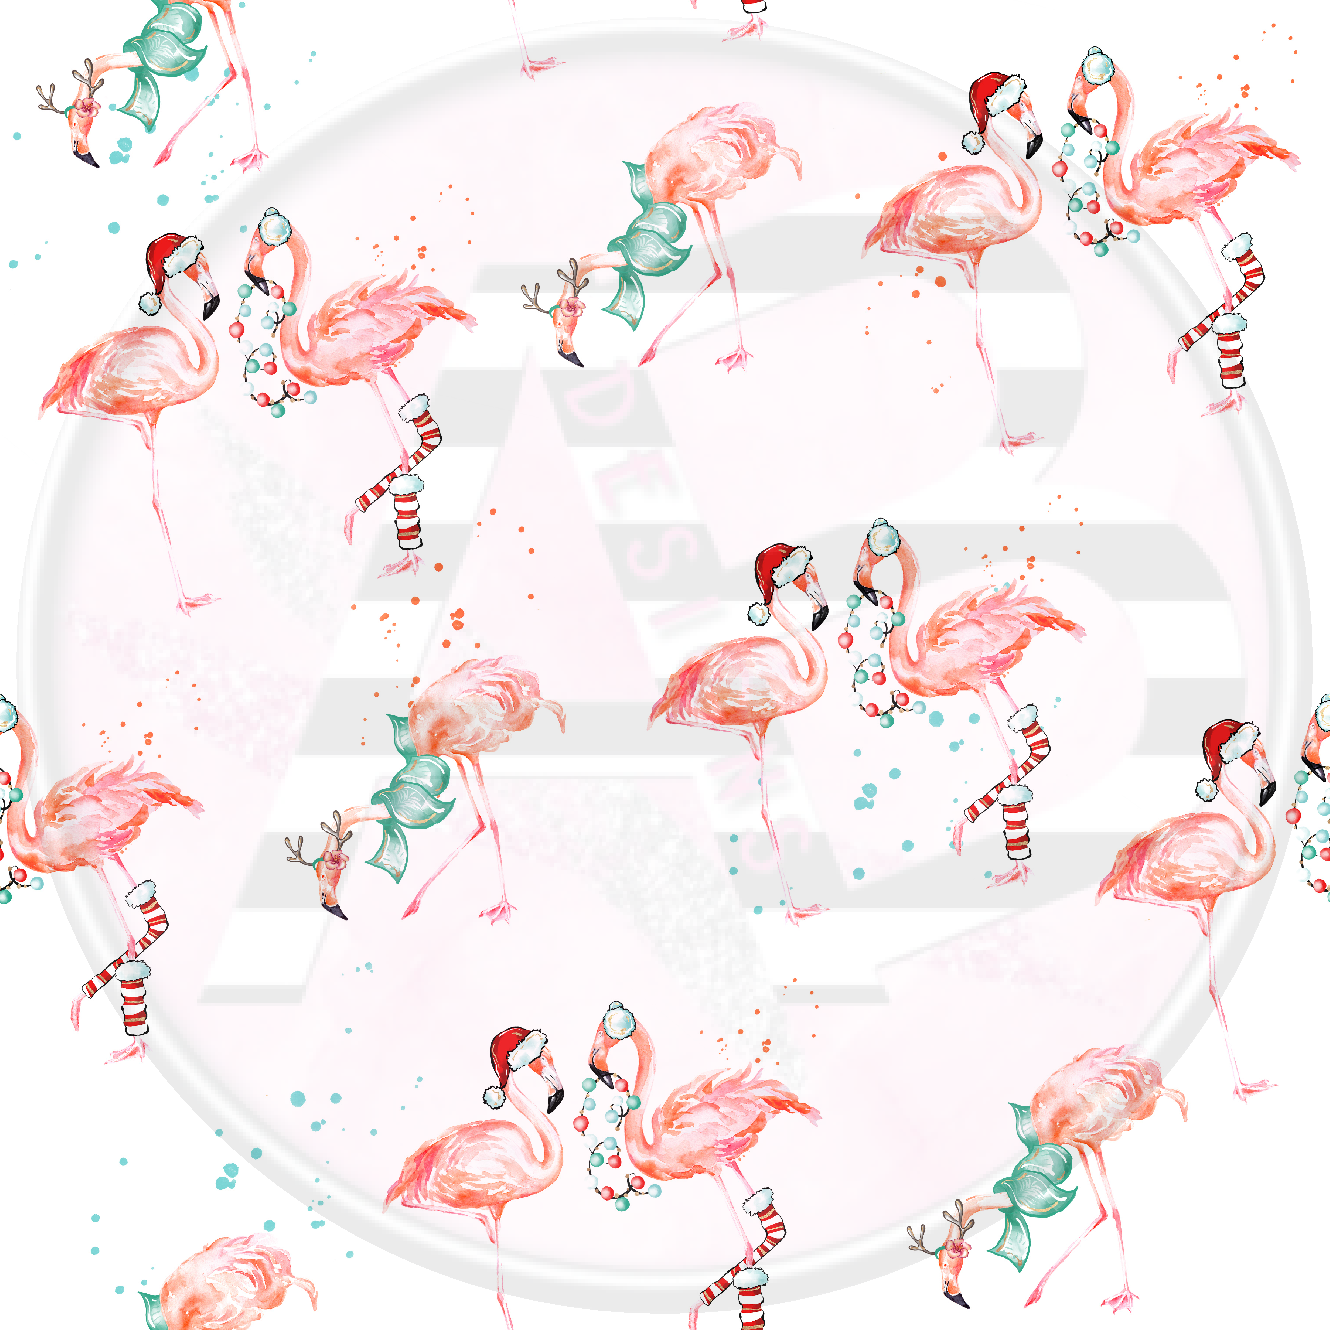 Adhesive Patterned Vinyl - Christmas Flamingo 1